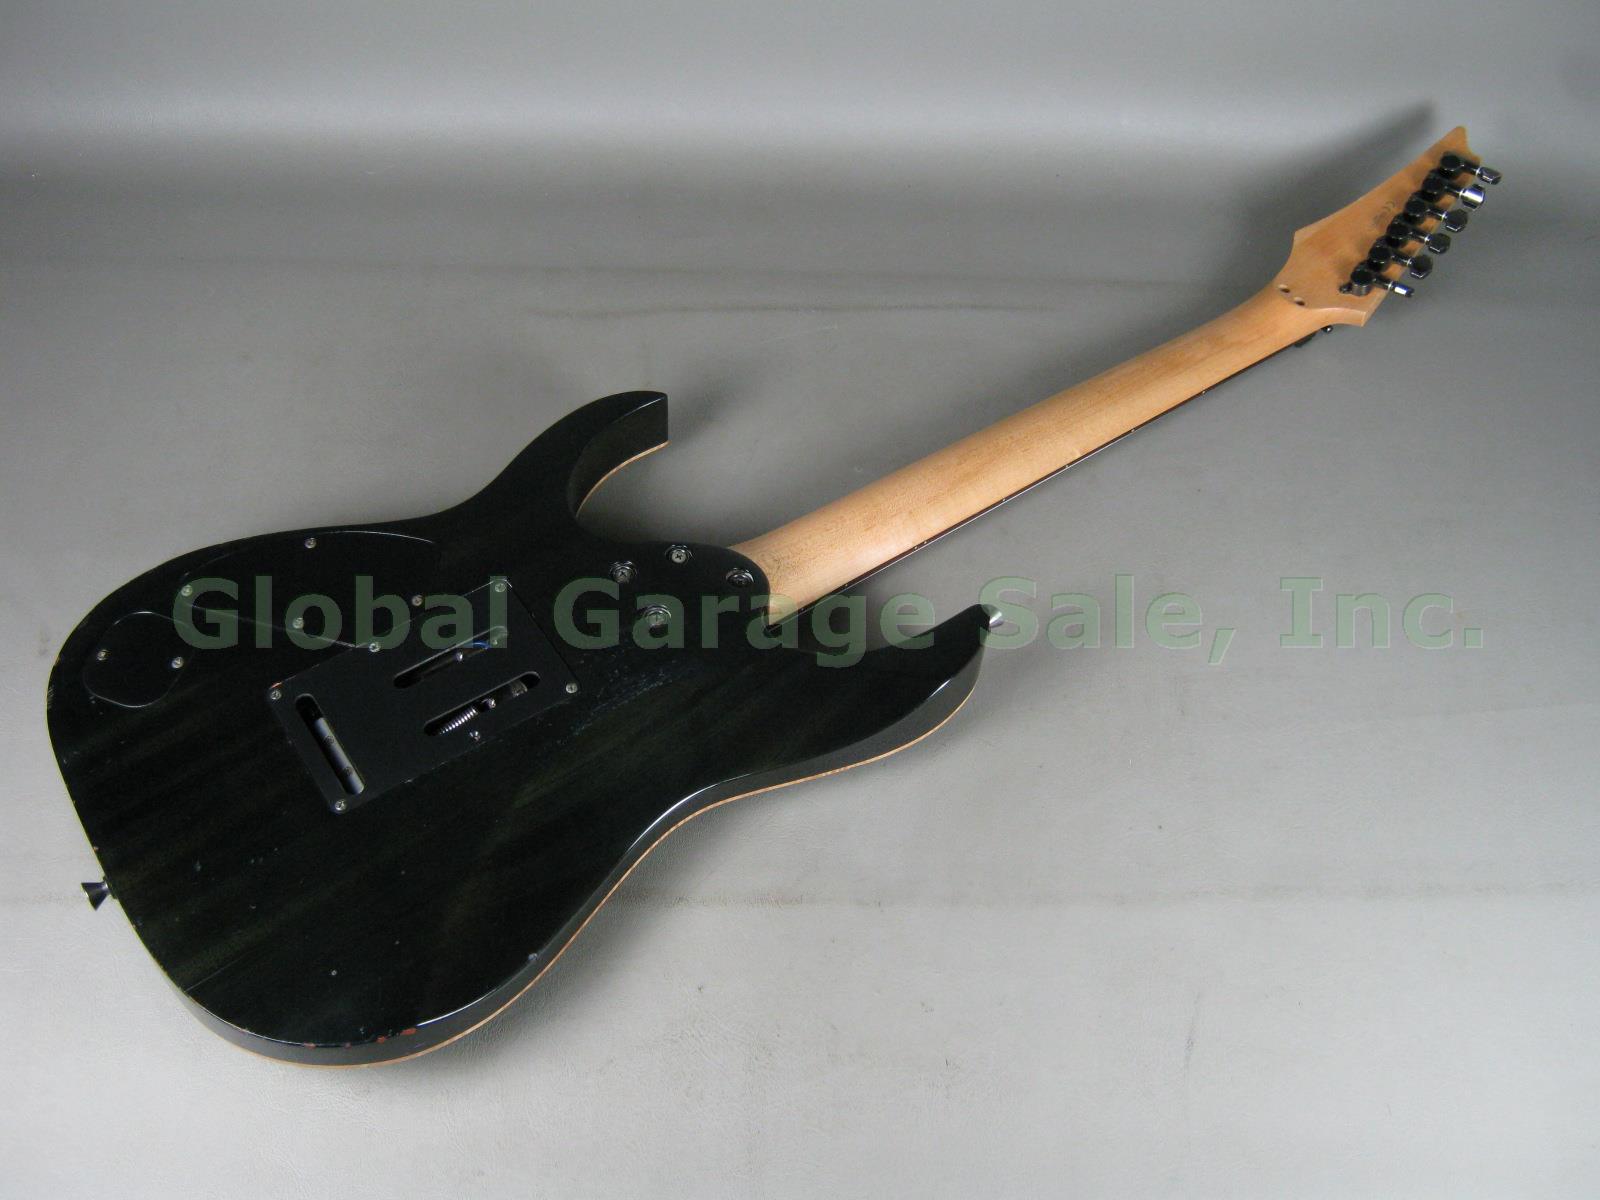 1999 Ibanez Prestige RG3120 Electric Guitar Blue Flame Maple Floyd Rose Tremolo 11